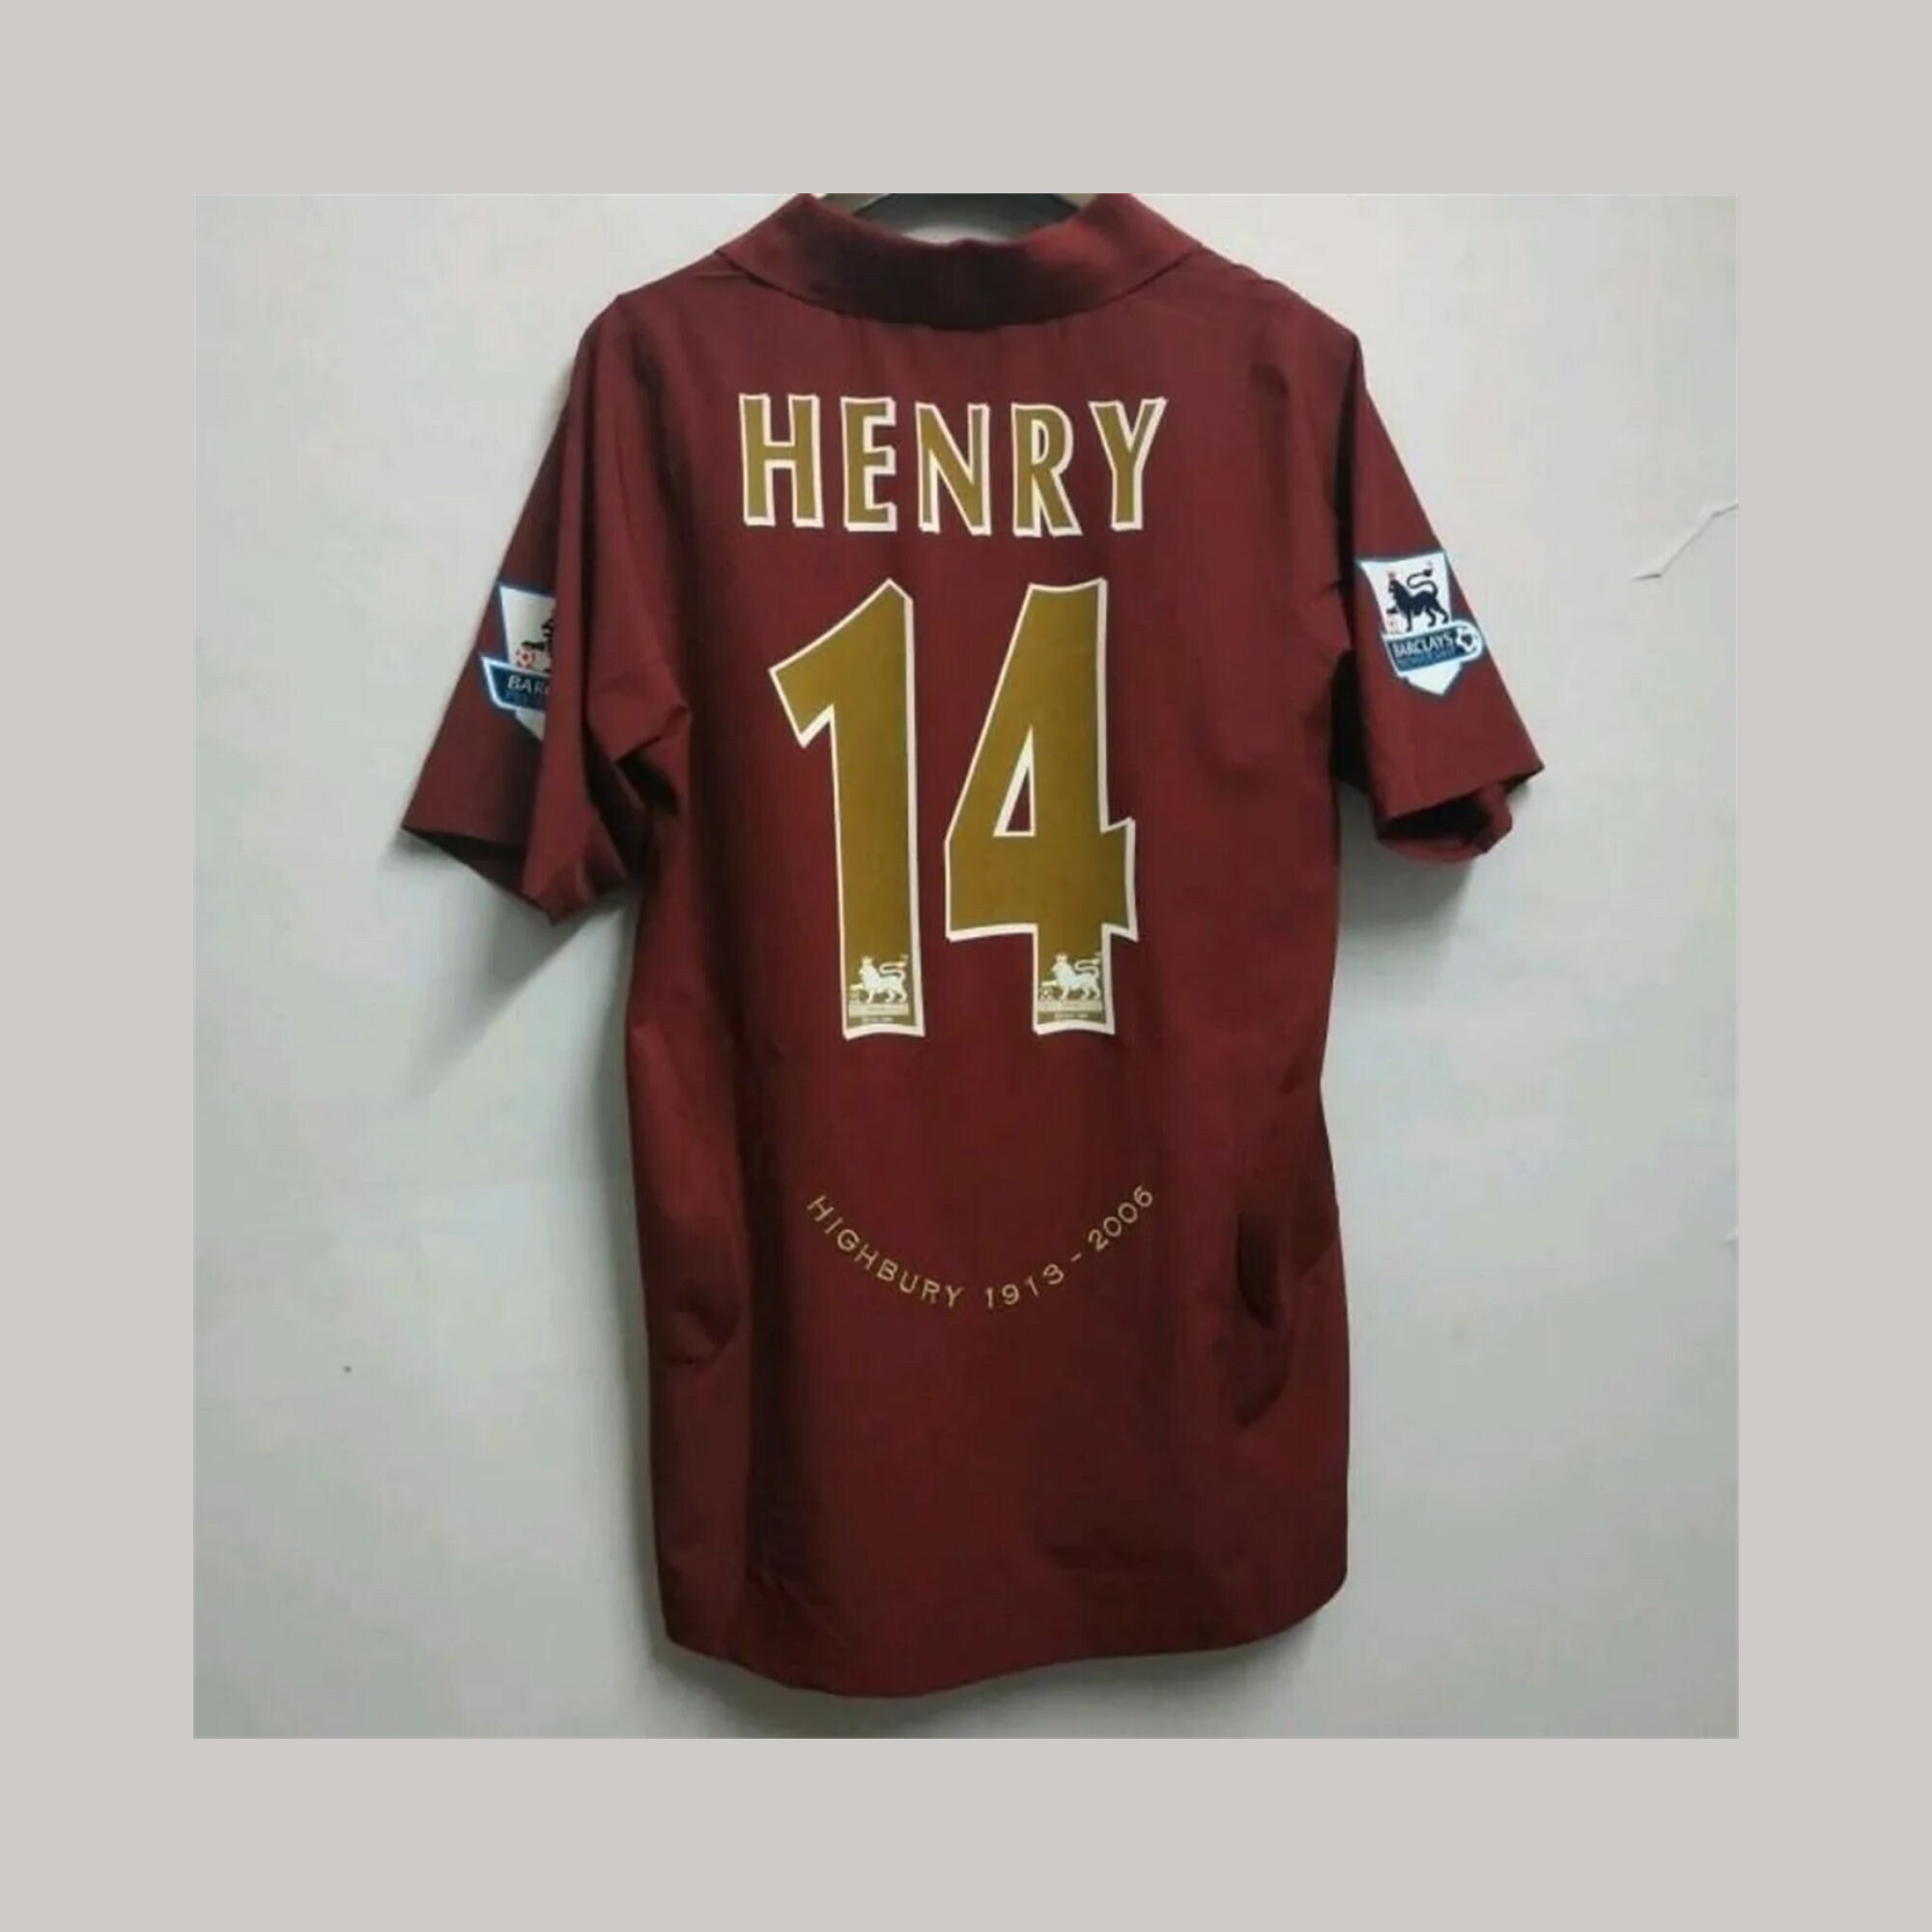 Football fashion crimes: Thierry Henry's Tie-shirt